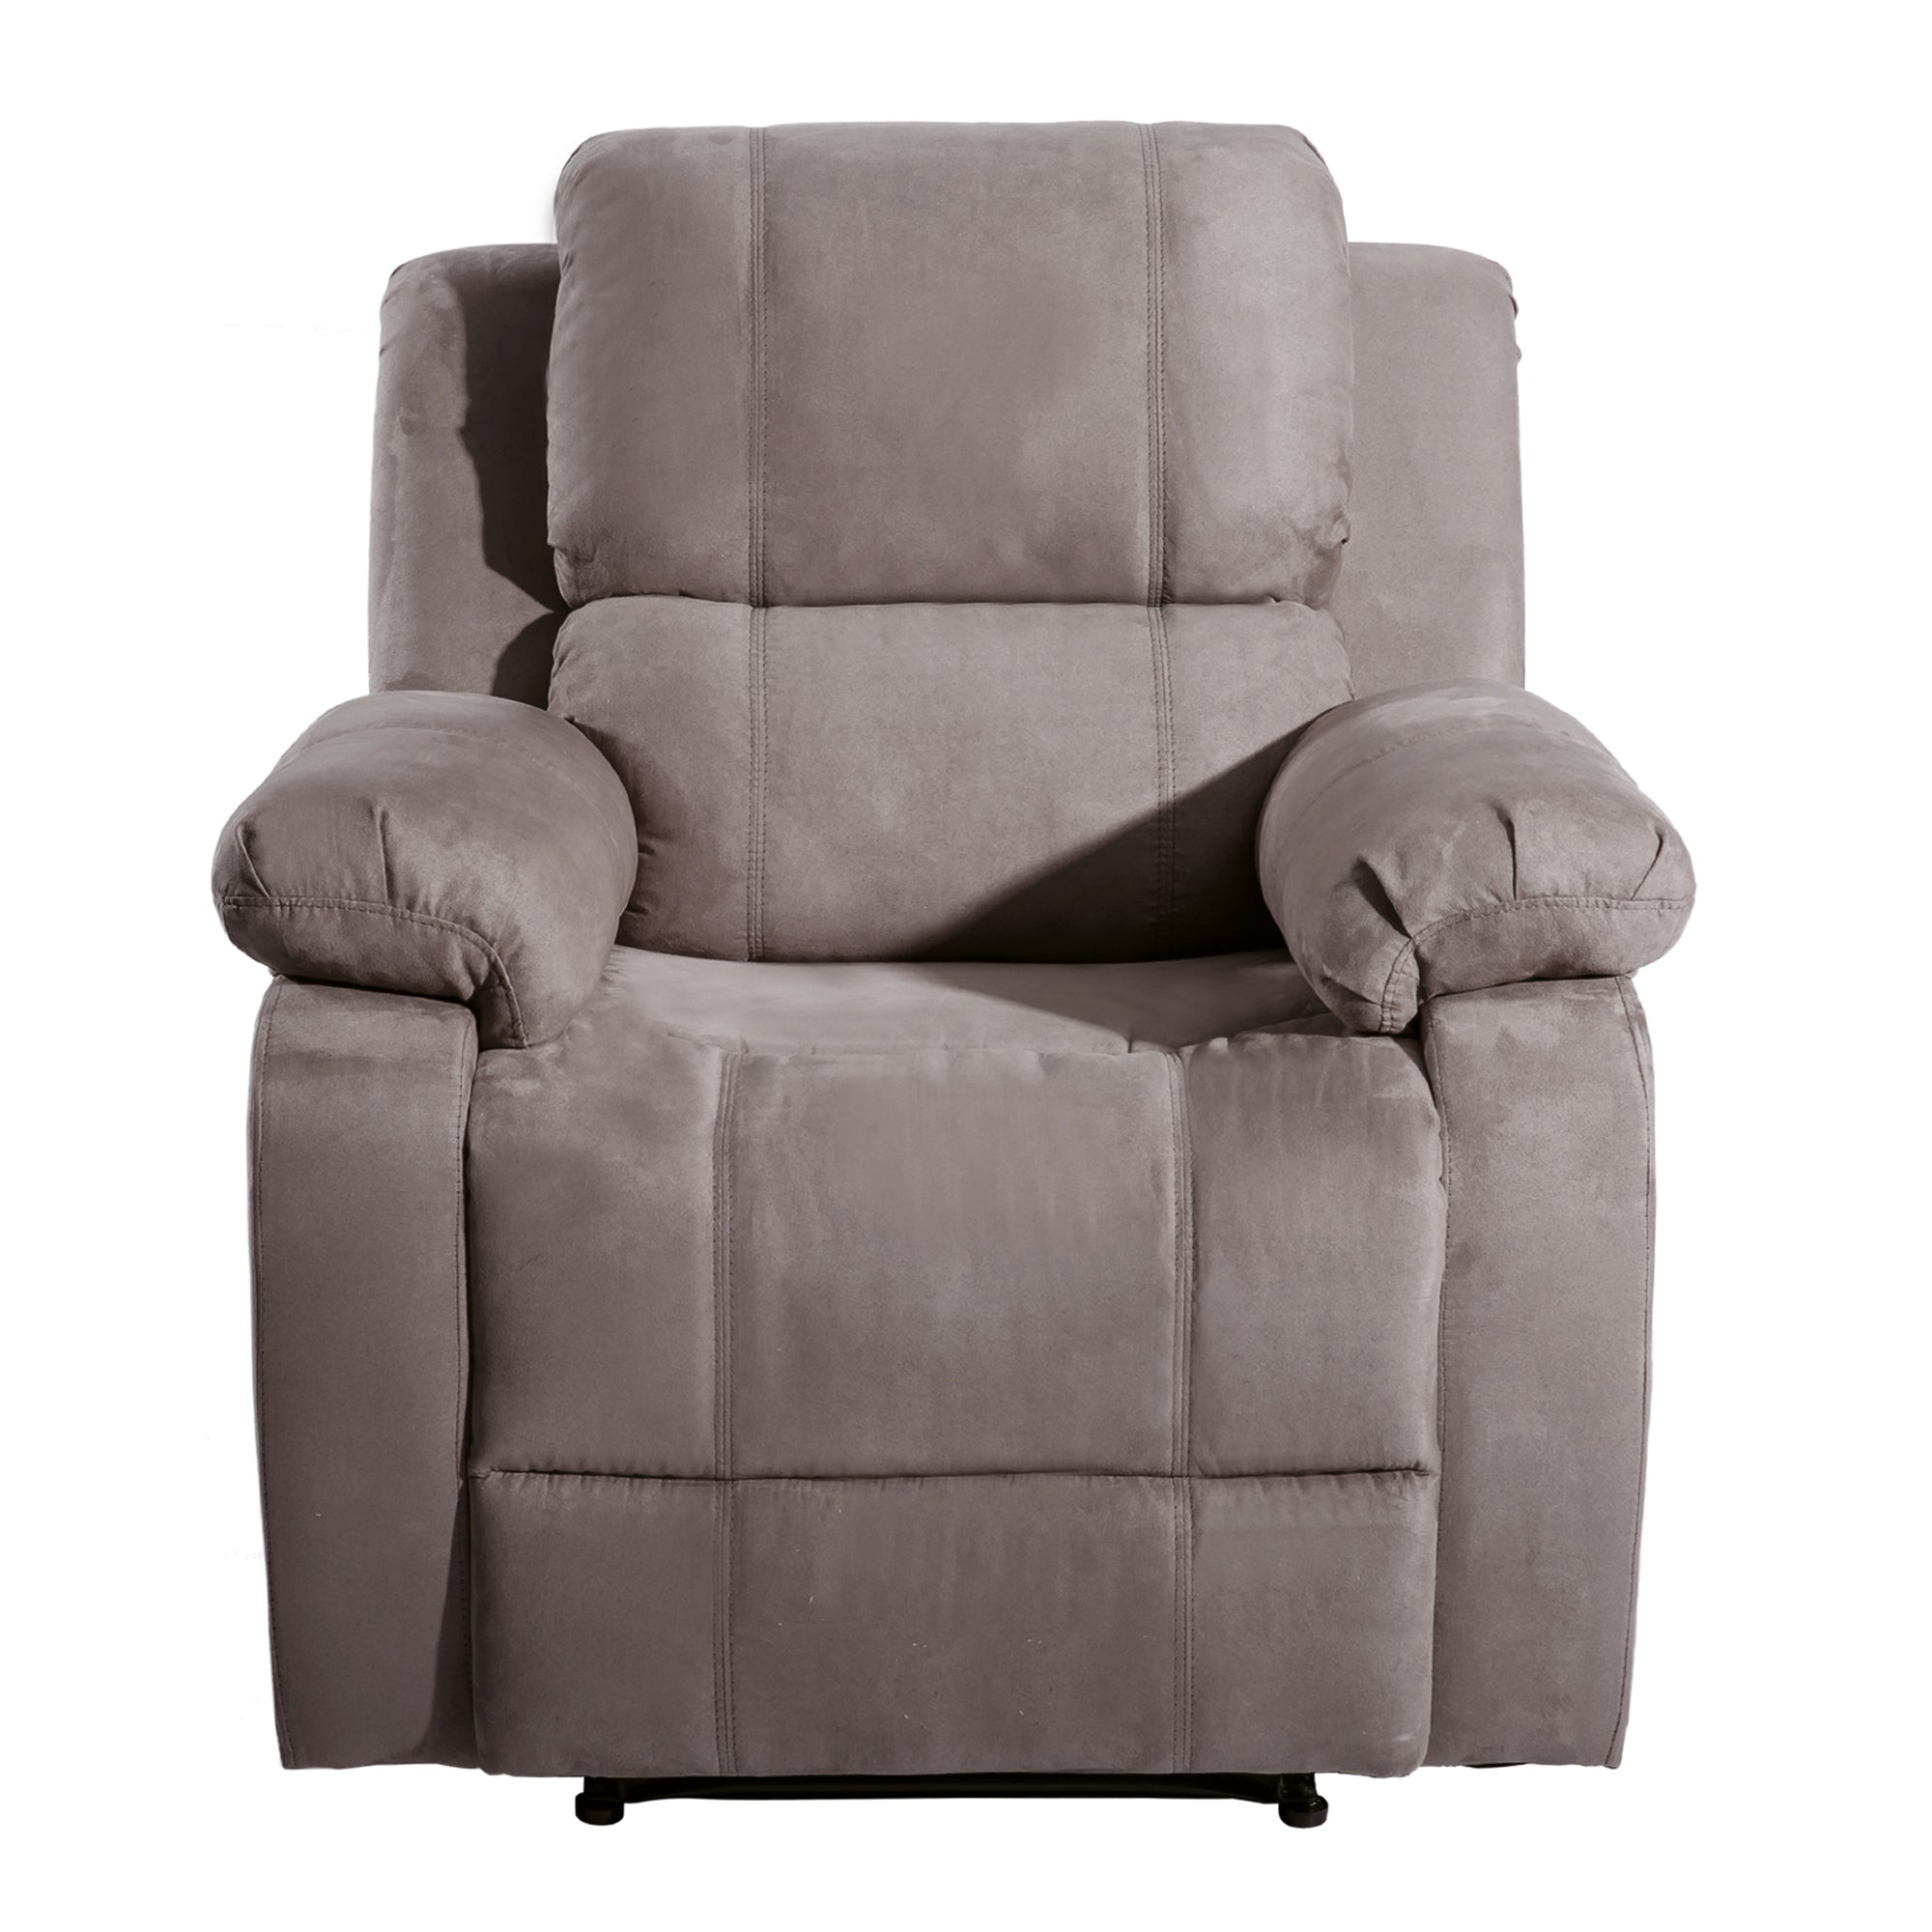 RaDEWAY Heated Massage Recliner Sofa Chair Ergonomic Lounge with 8 Vibration Points